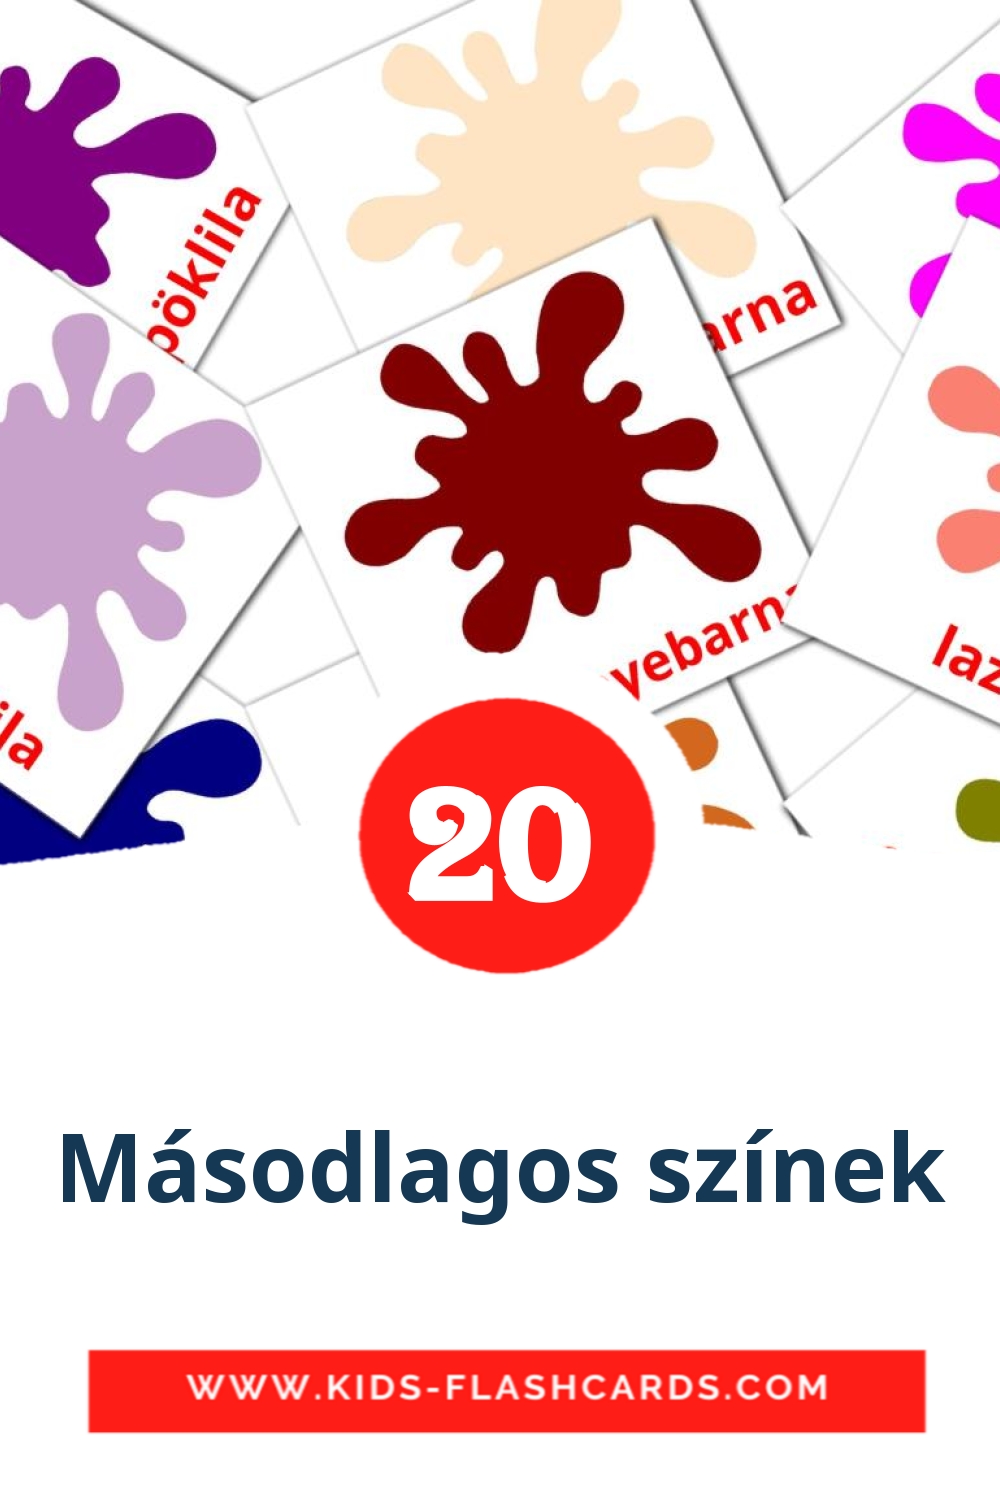 20 carte illustrate di Másodlagos színek per la scuola materna in ungherese